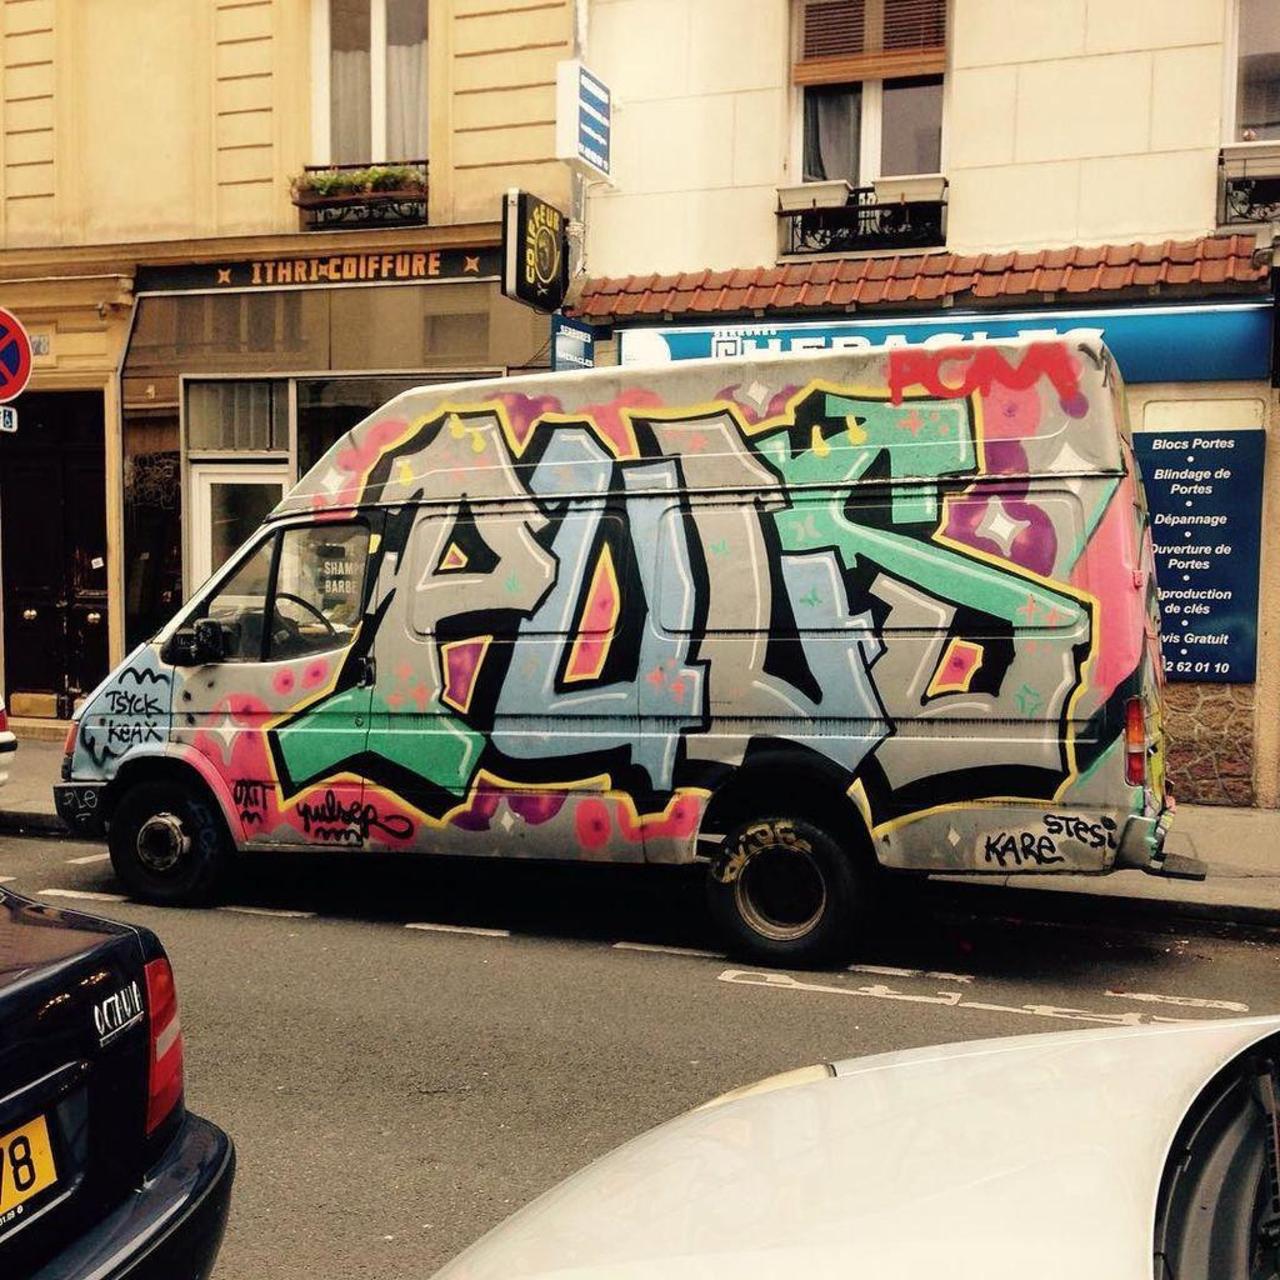 Graf-on-wheels !
#paris #streetart #streetartparis #graffiti #grafittiart #paris18eme by jay_vats_75018 http://t.co/KtebbzhBfg